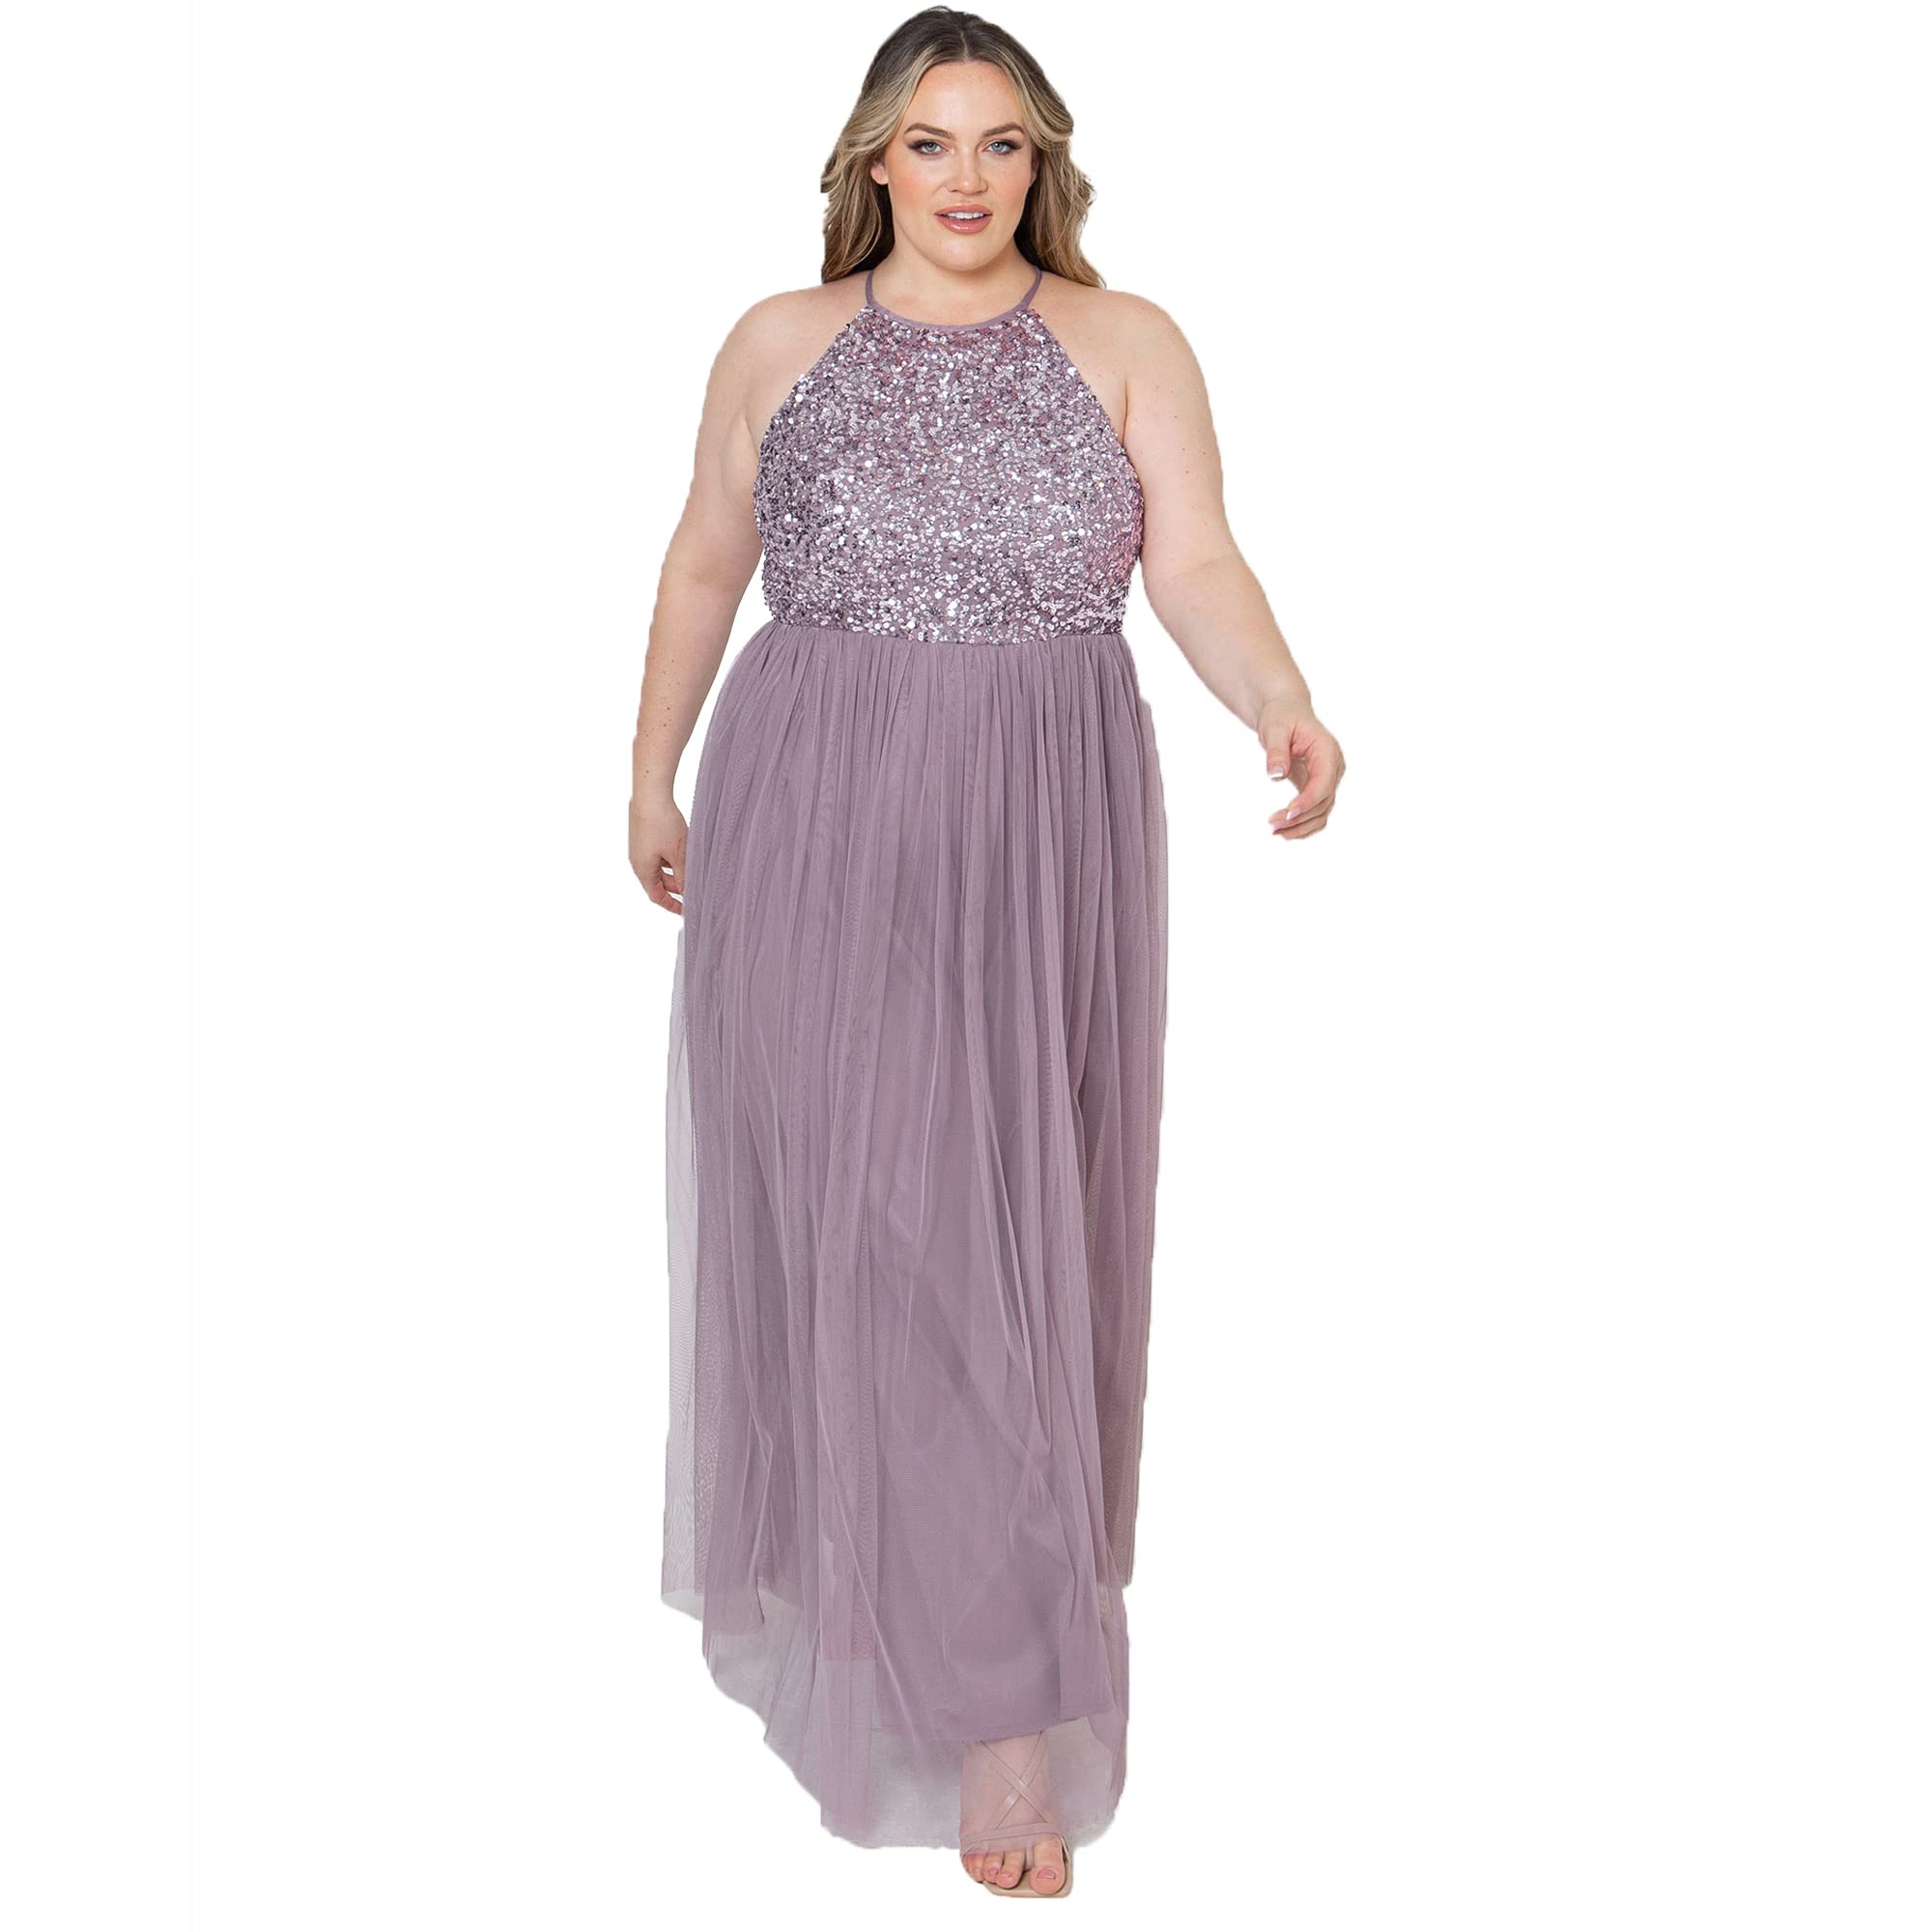 Maya Deluxe Damen Rl004 Mm Bridesmaid Dress, Moody Lilac, 38 EU